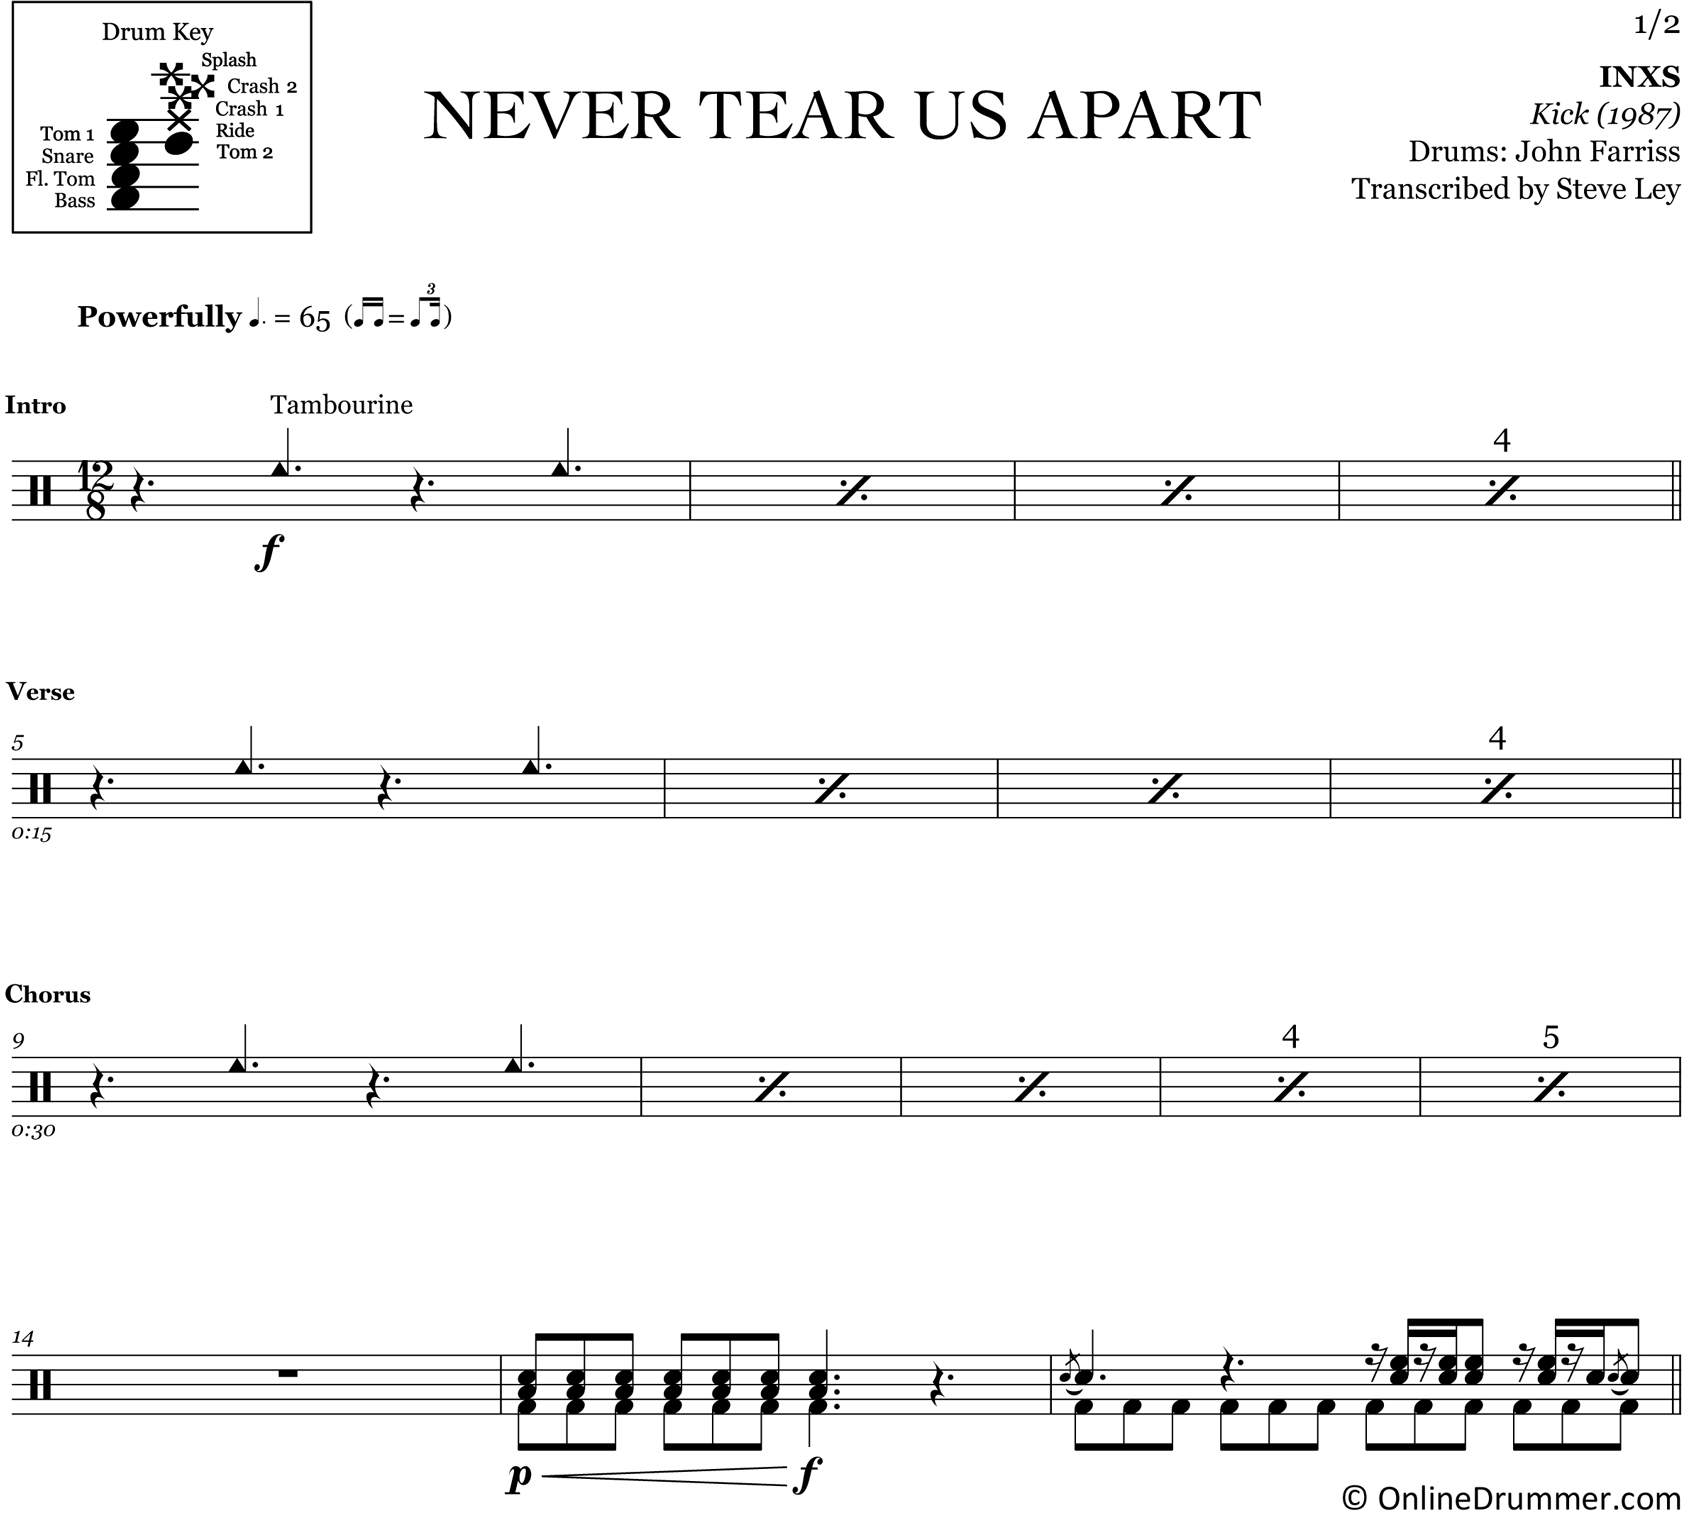 Never Tear Us Apart - INXS - Drum Sheet Music